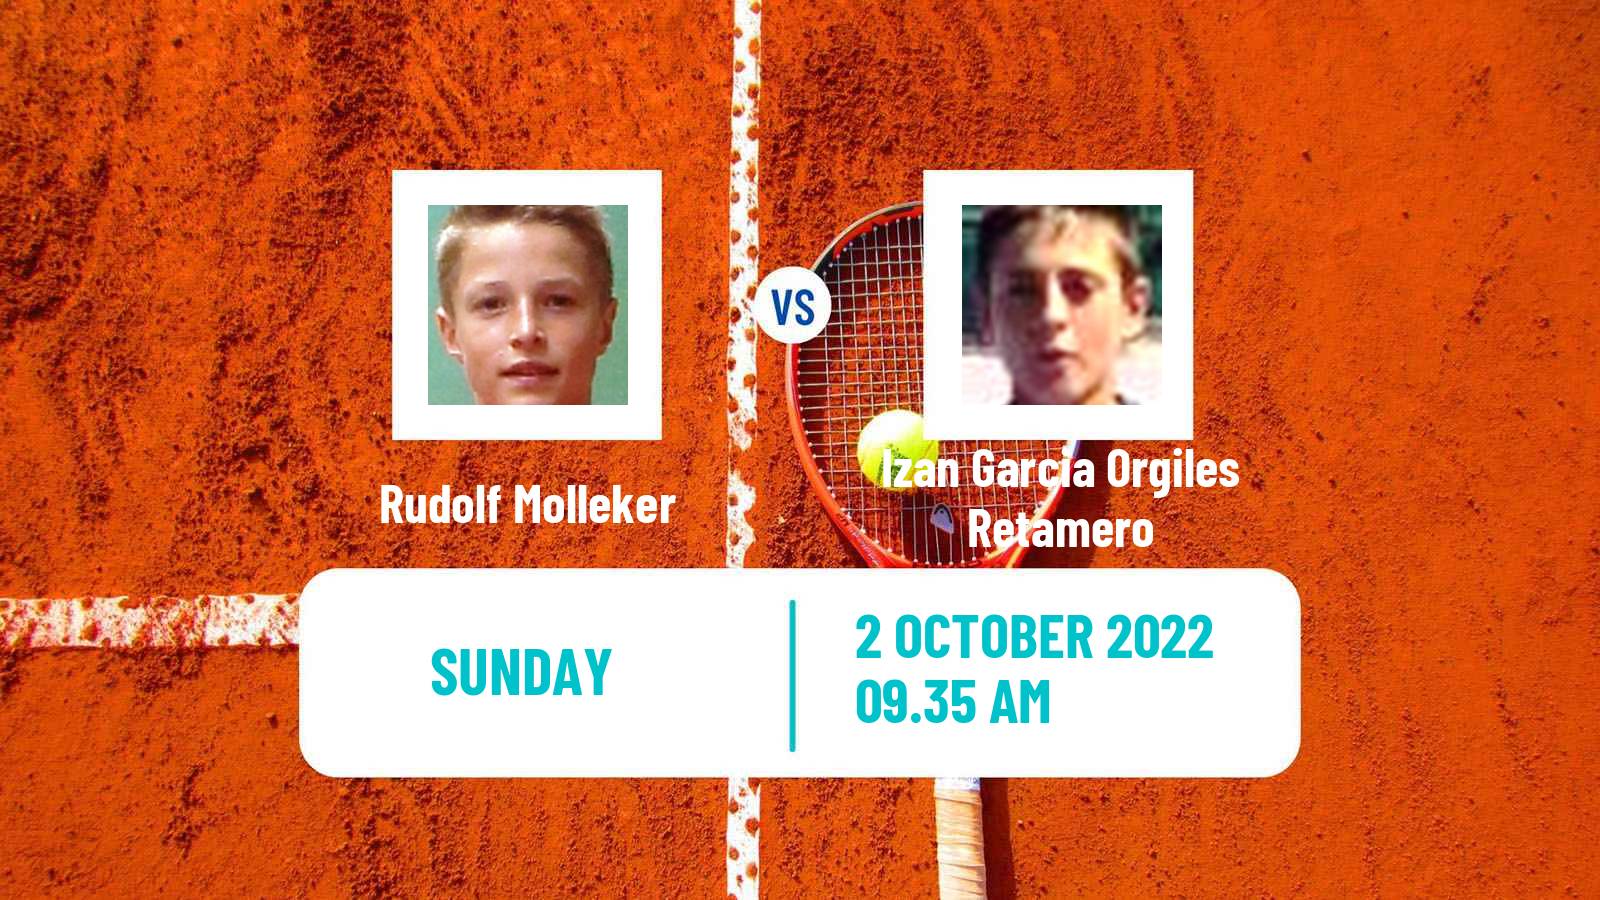 Tennis ATP Challenger Rudolf Molleker - Izan Garcia Orgiles Retamero